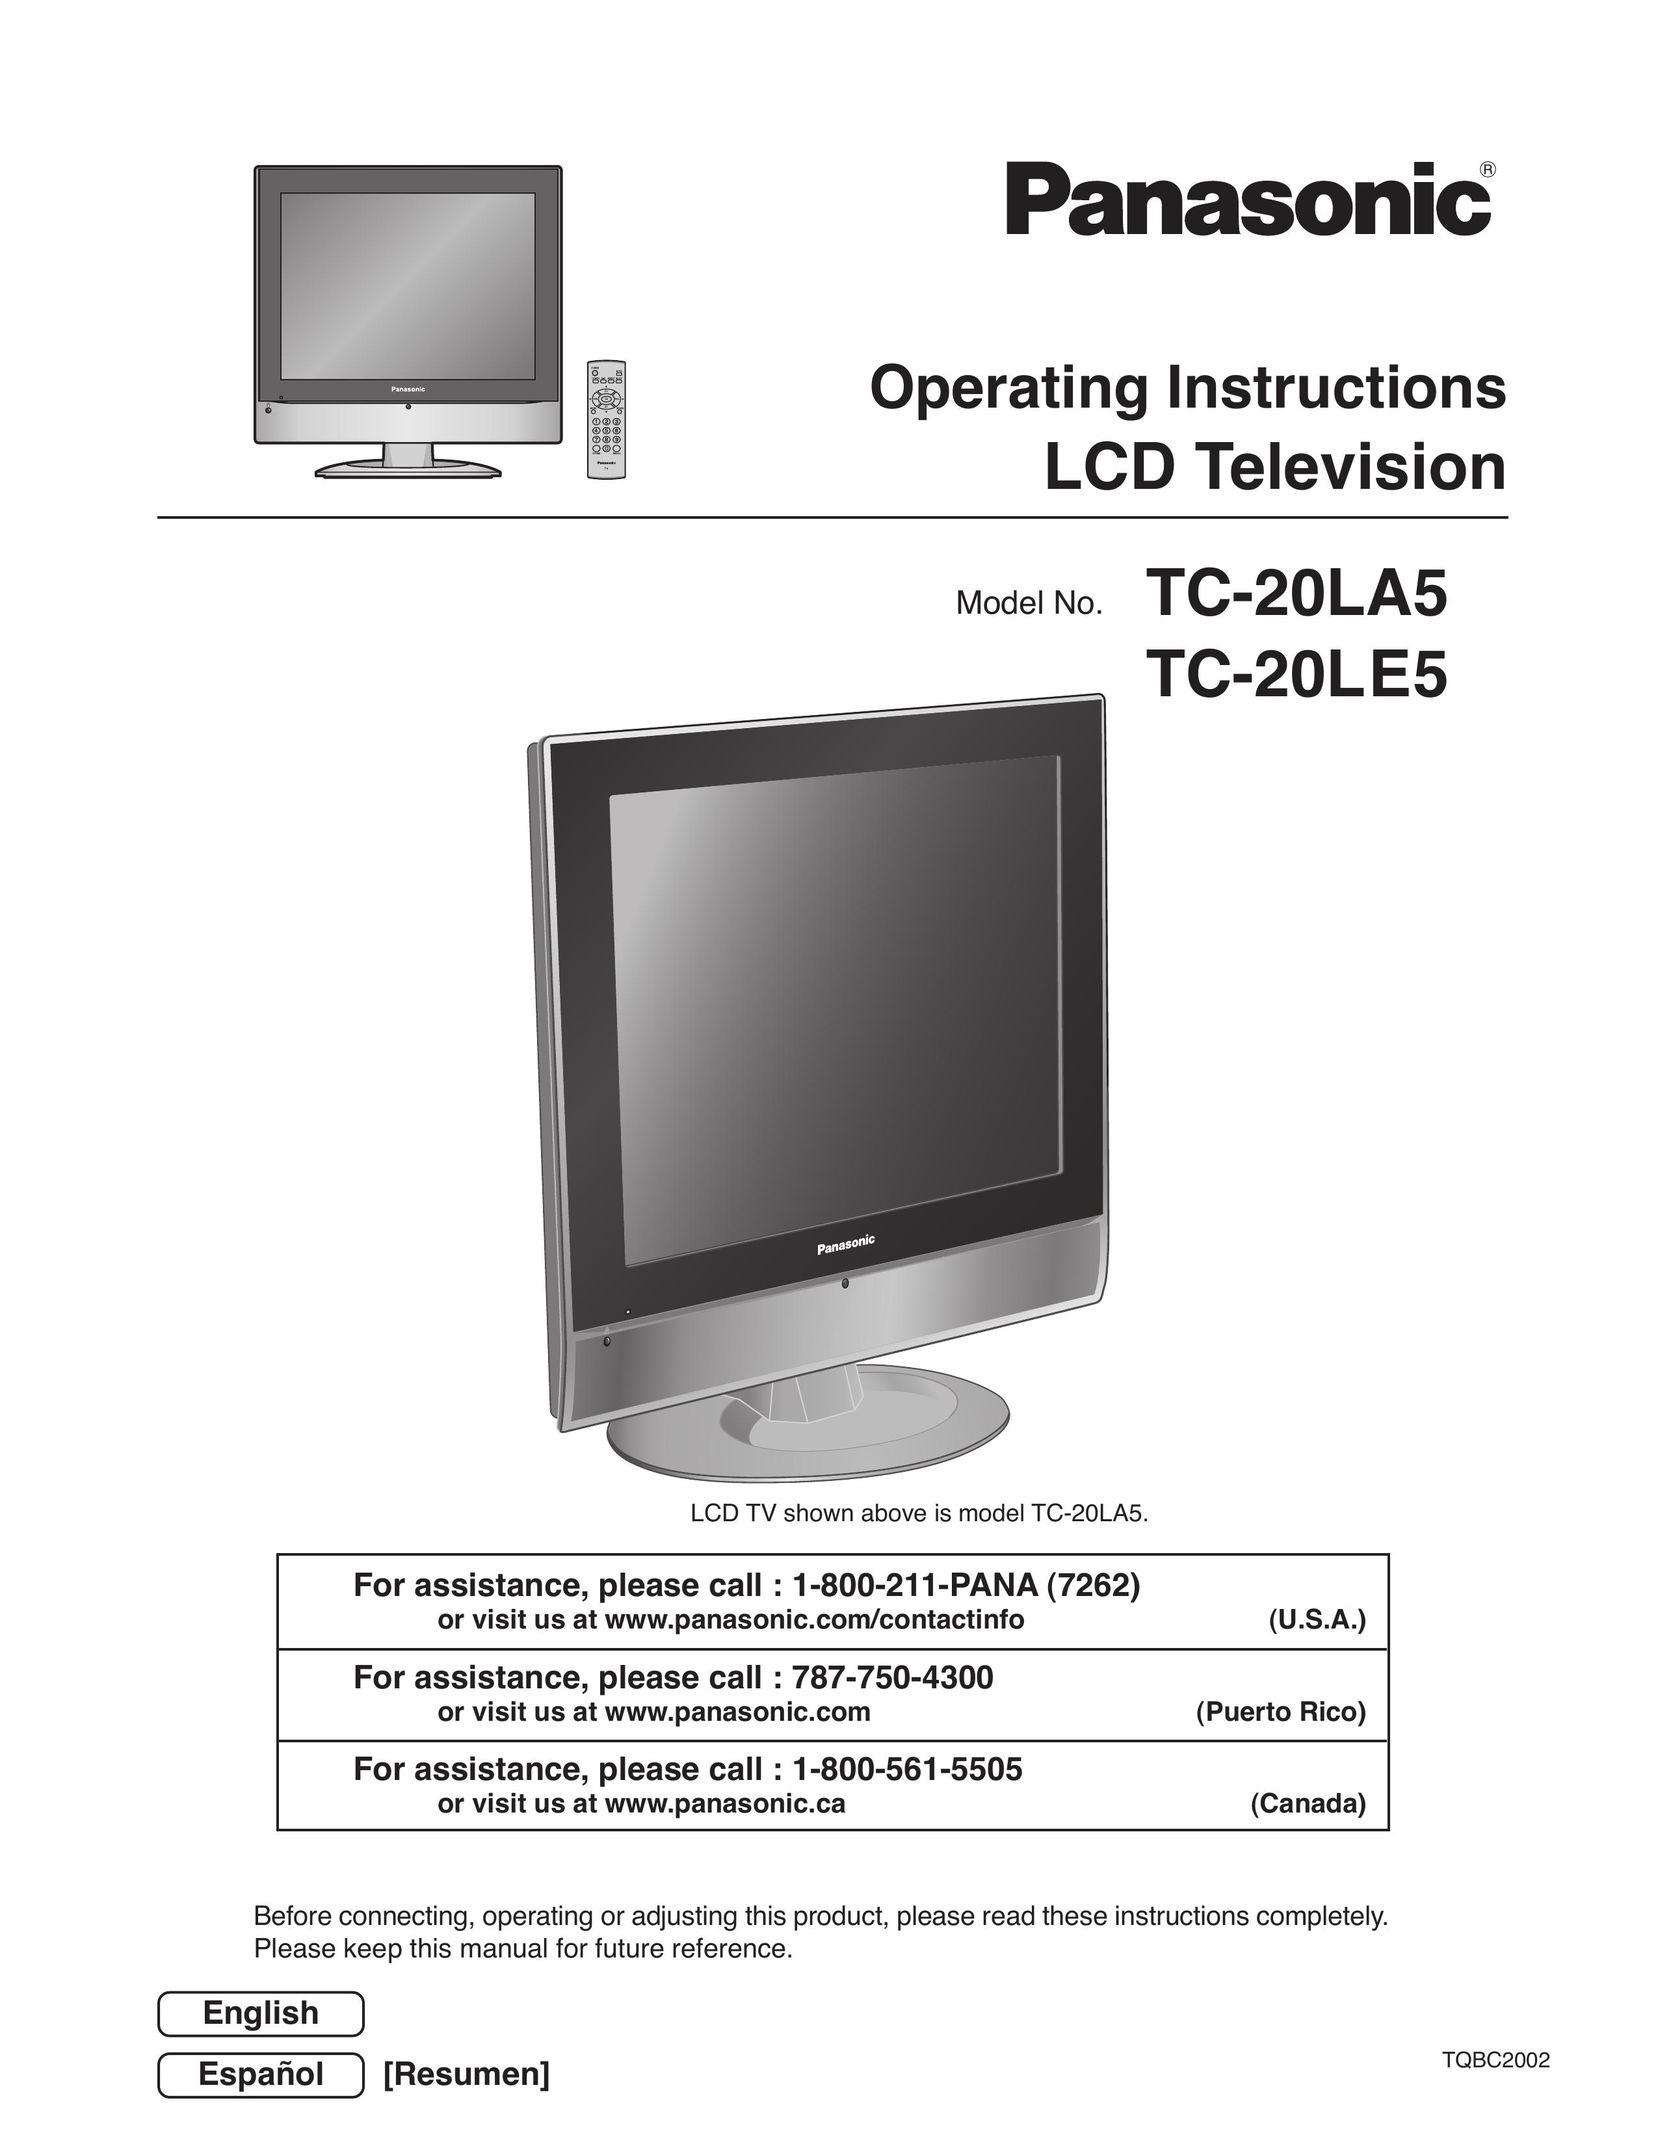 Panasonic C-20LA5 Flat Panel Television User Manual